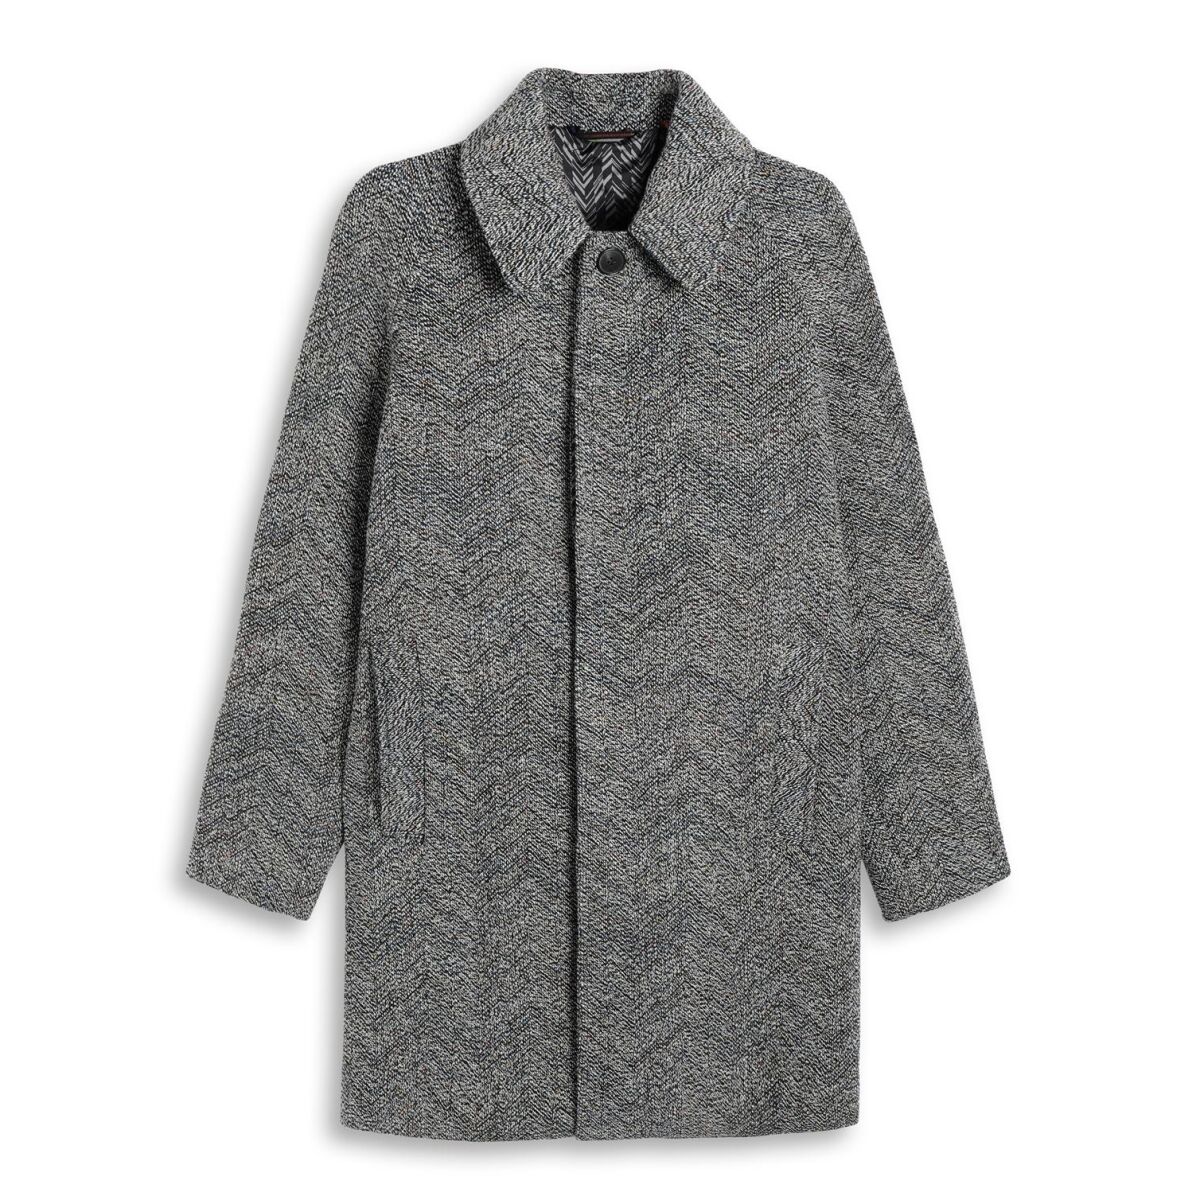 A Missoni tweed coat.